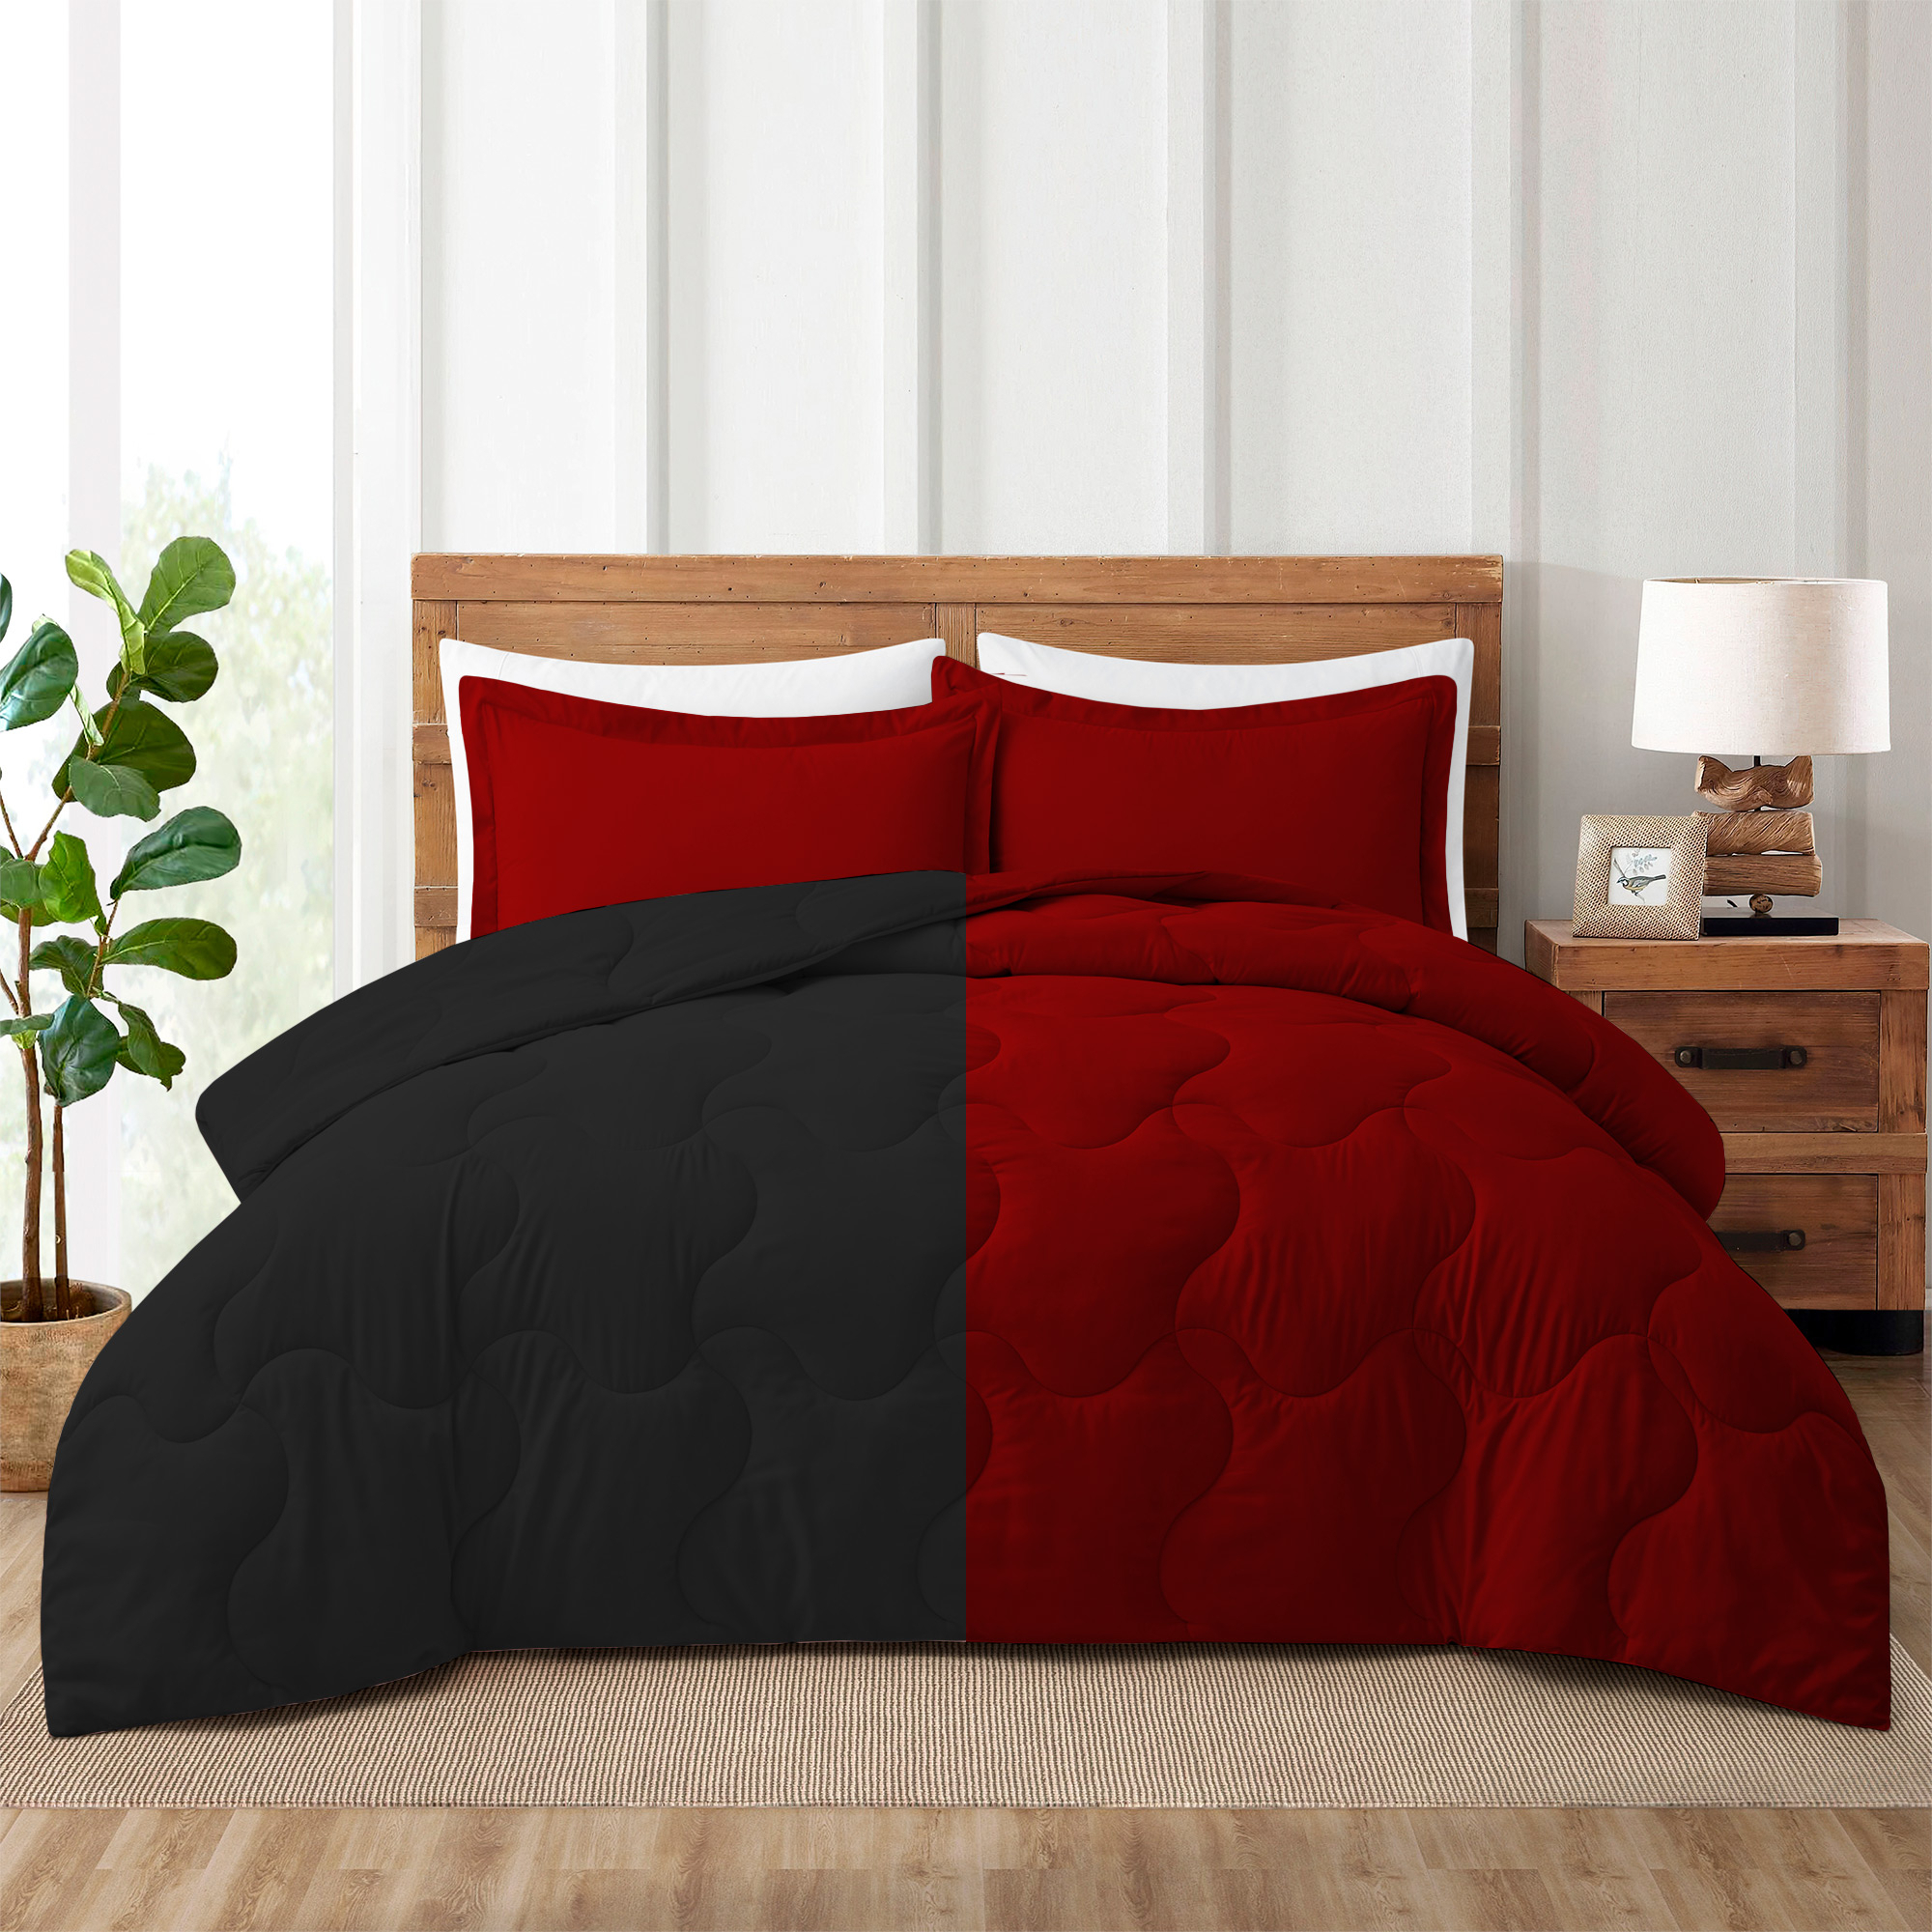 Reversible Superior Soft Comforter Sets, Down Alternative Comforter, Black&Red, Twin